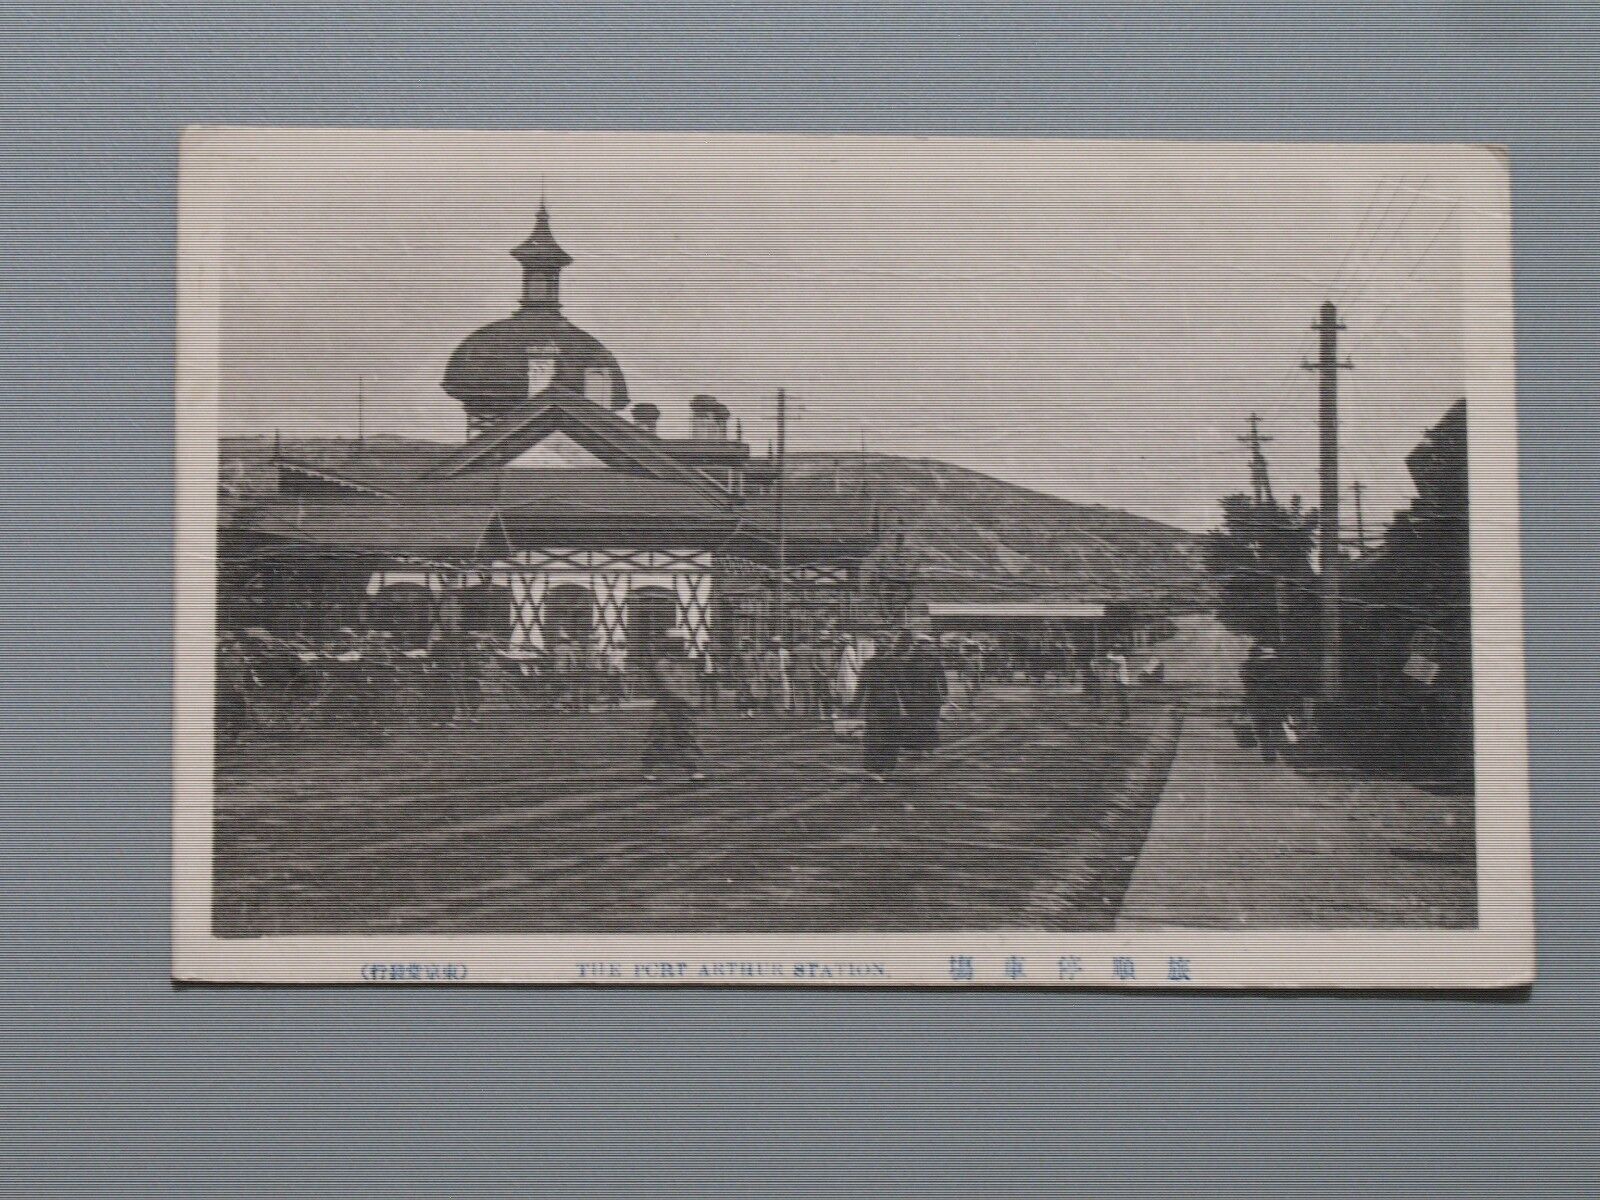 Manchuria China Port Arthur Station Vintage Postcard Japanese Occupation